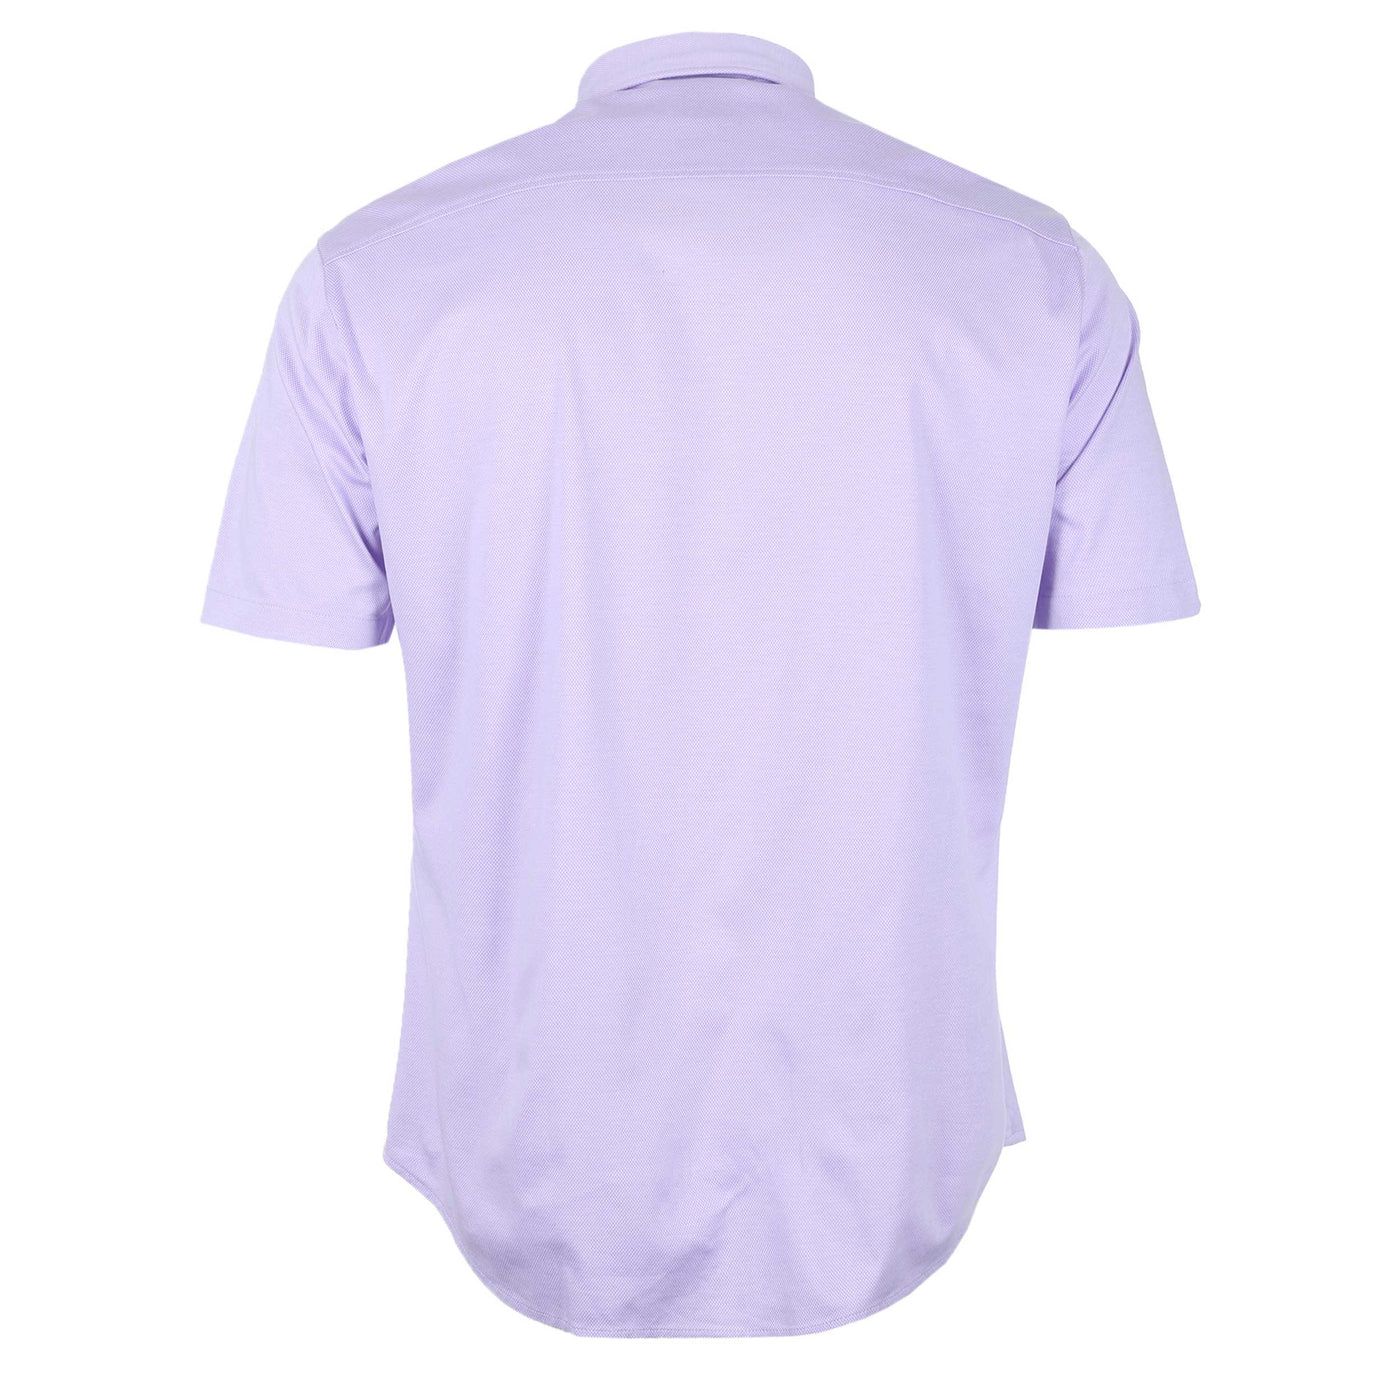 BOSS Biadia R Short Sleeve Shirt in Lilac Back